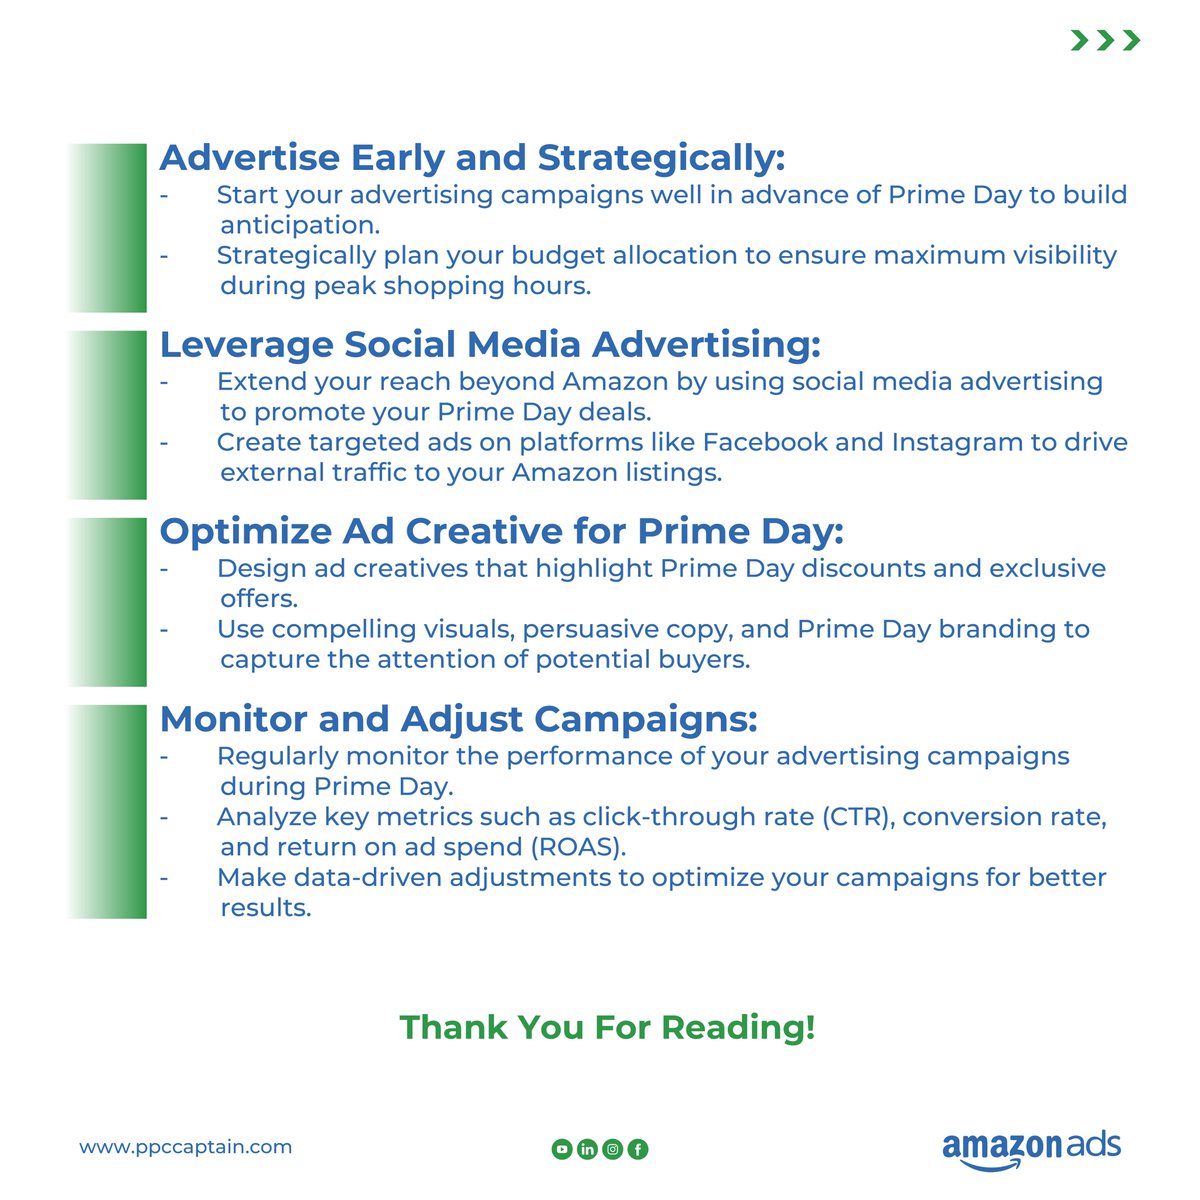 Prime Day Audience By Leveraging Targeted Advertising Strategies! Strategies No 4

#PrimeDay #AmazonAdvertising #AmazonTipsandTricks #AmazonPPCManager #AmazonVA #AmazonConsultant #AmazonVirtualAssistant #AmazonAdvertising #PPCCaptain